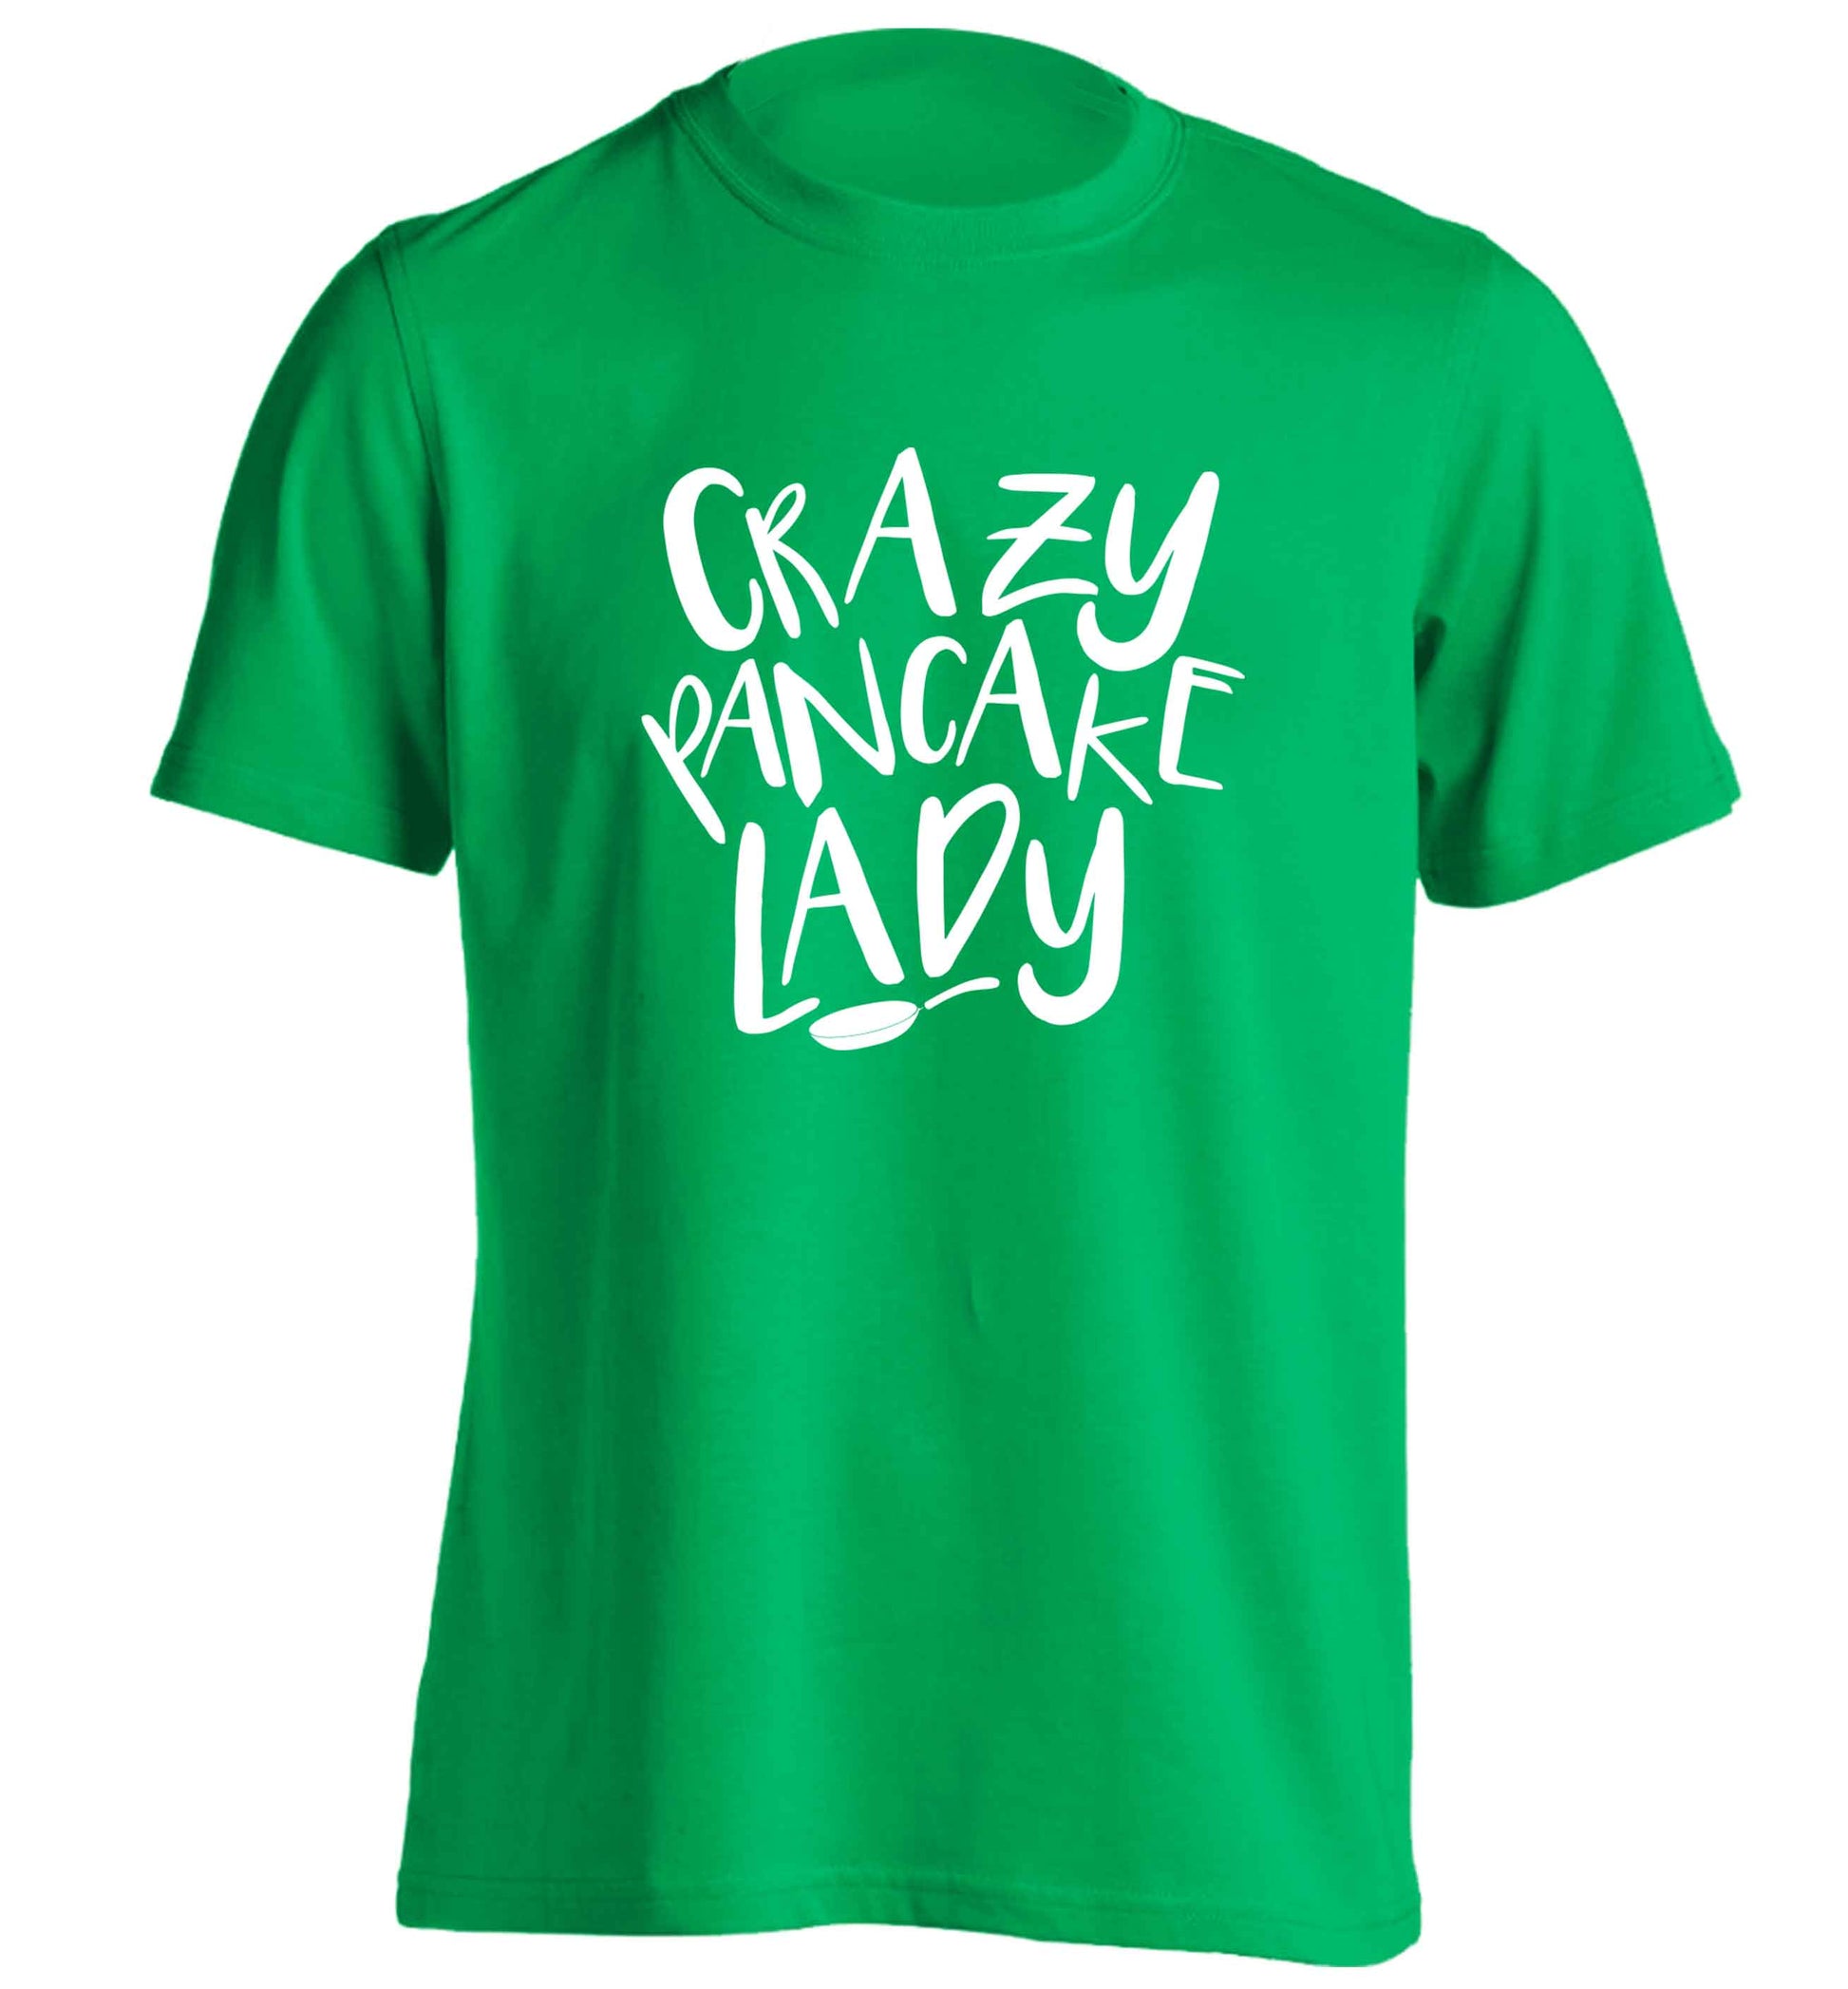 Crazy pancake lady adults unisex green Tshirt 2XL